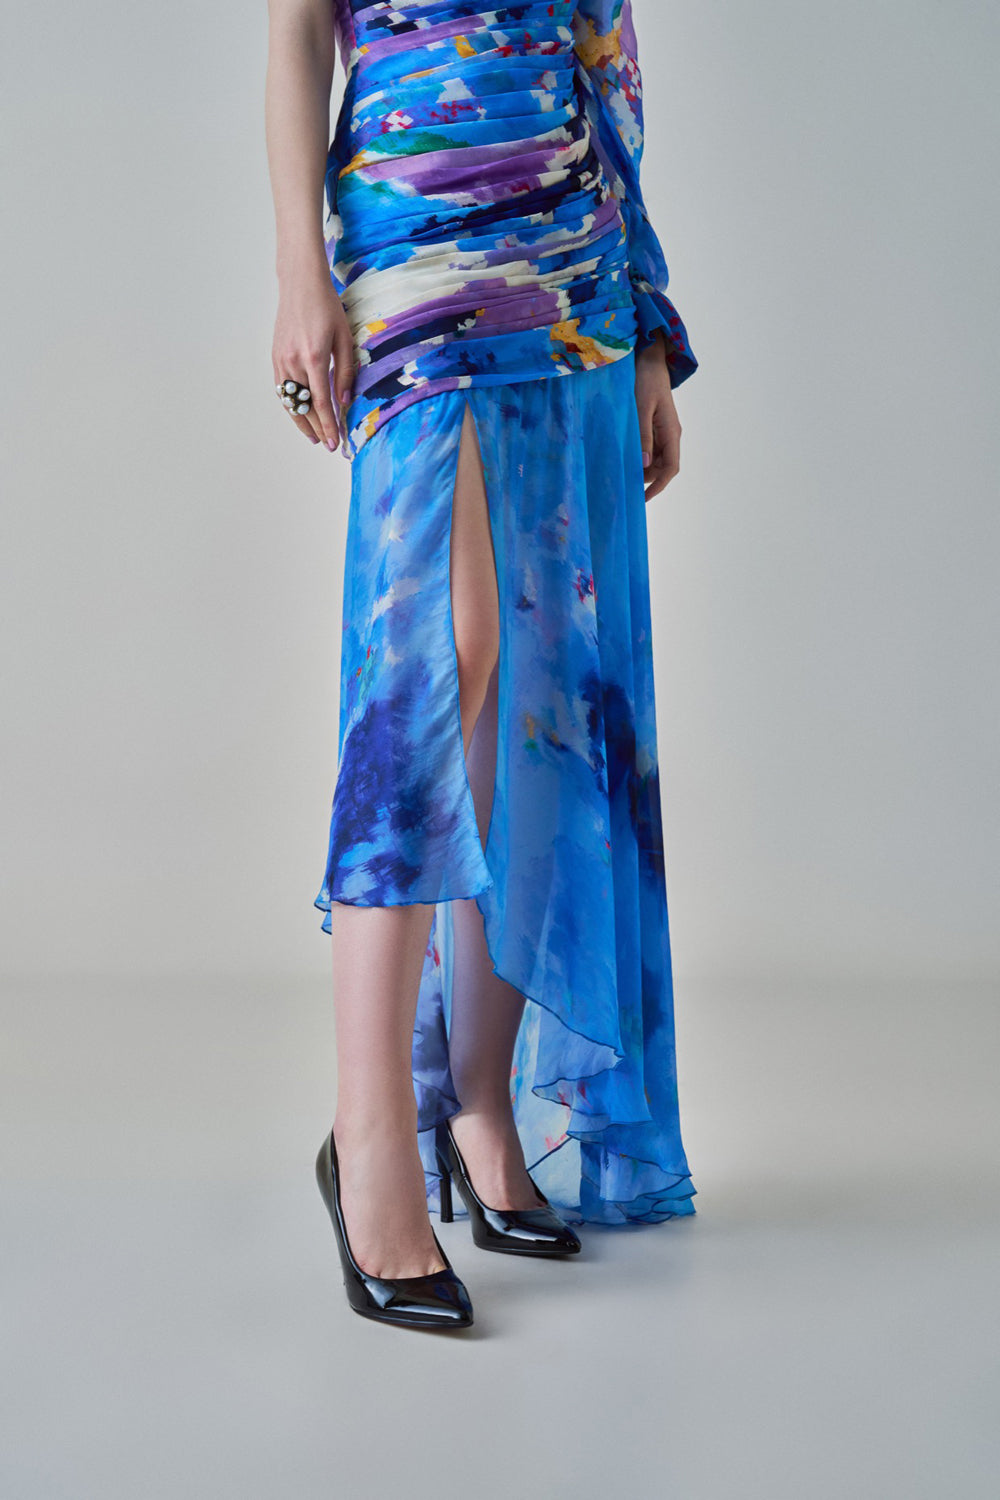 Alison Ikat Print  Dress